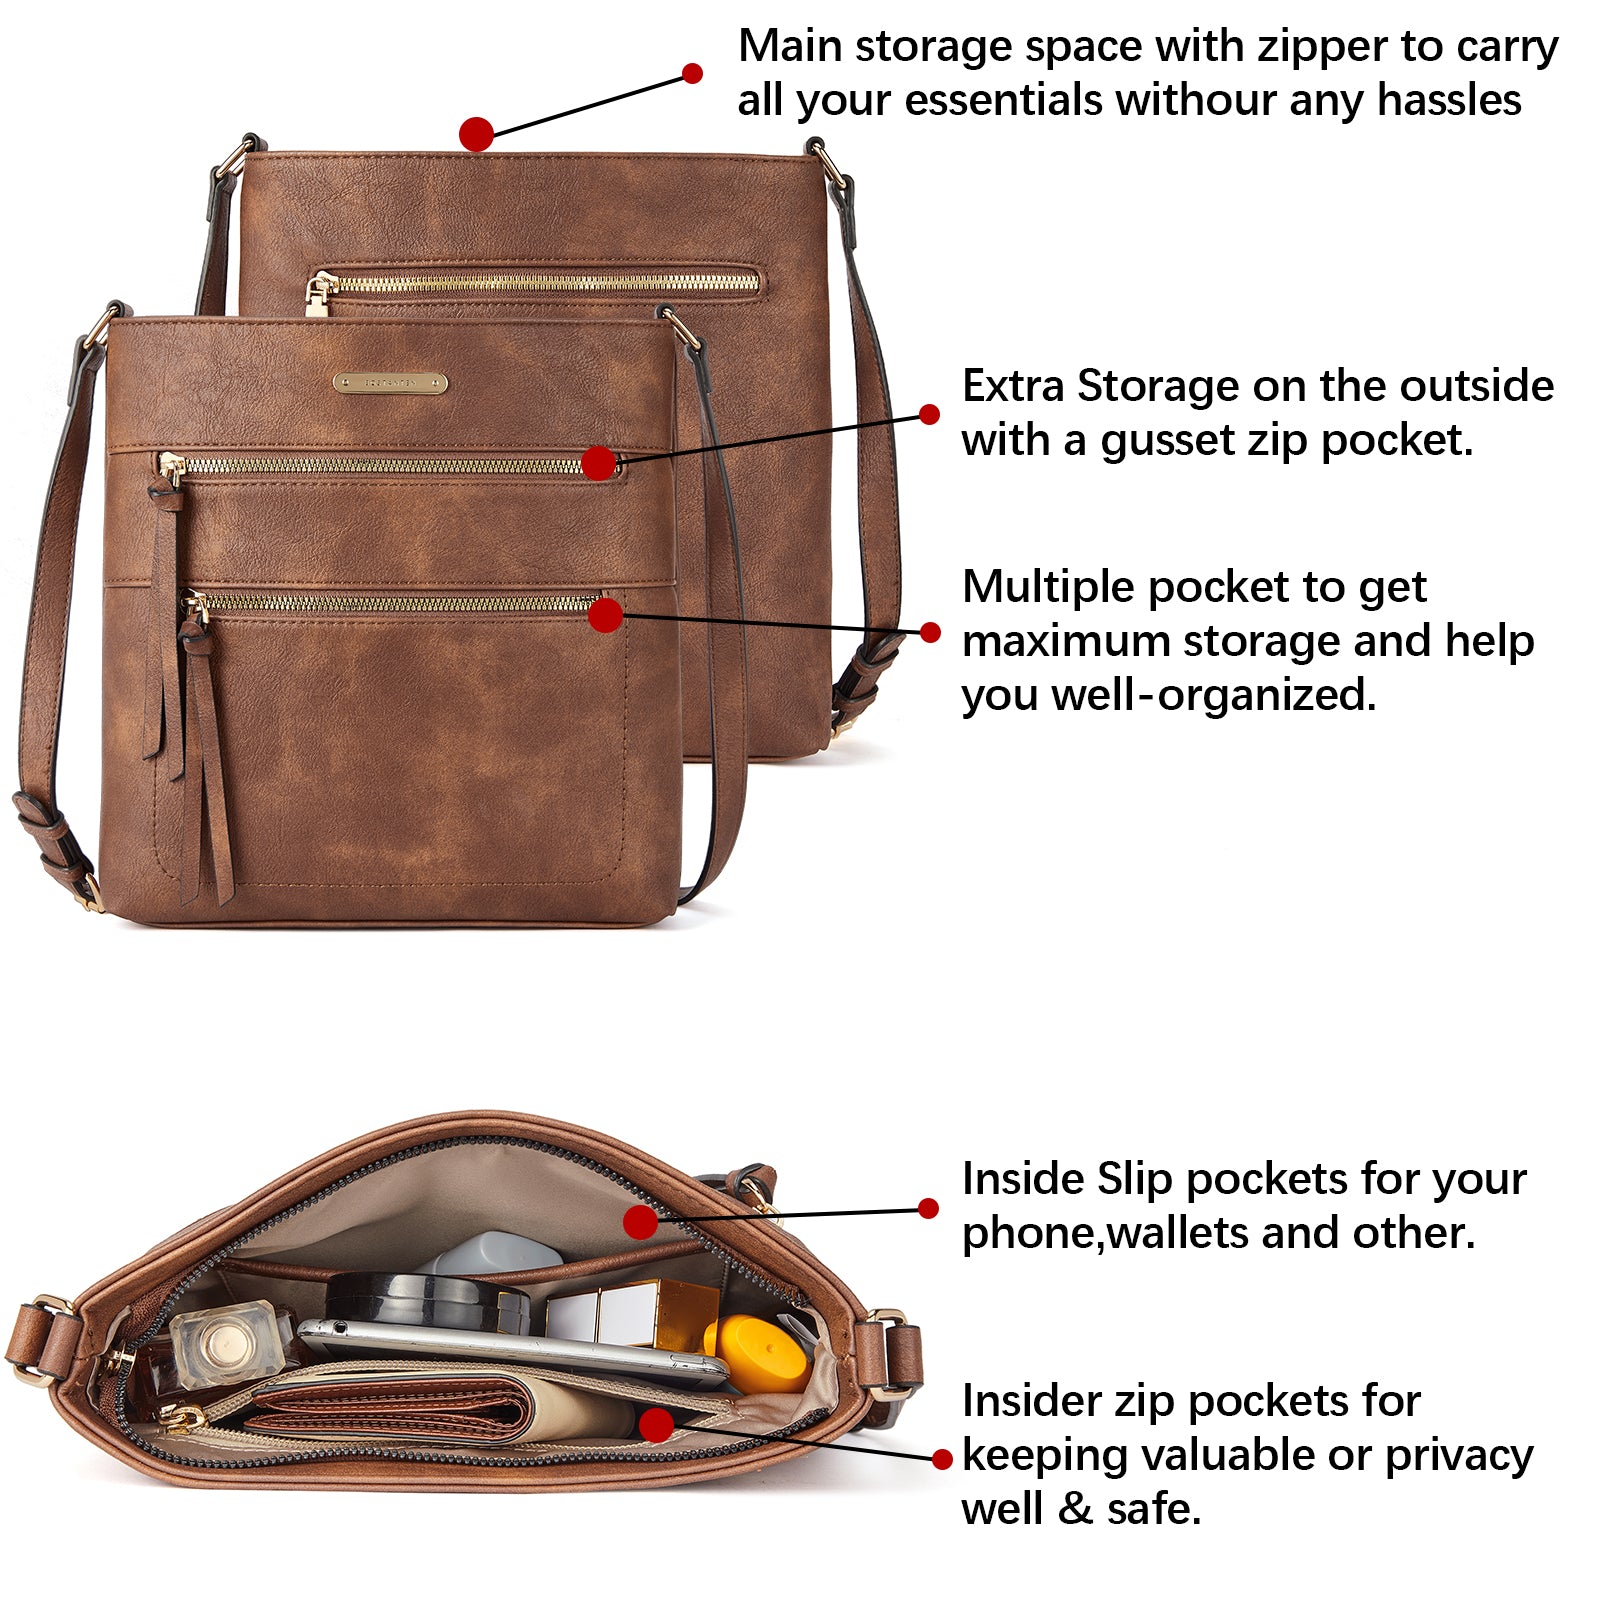 Leather Satchel | Everyday Carry Man Bag Pouch | Saddleback